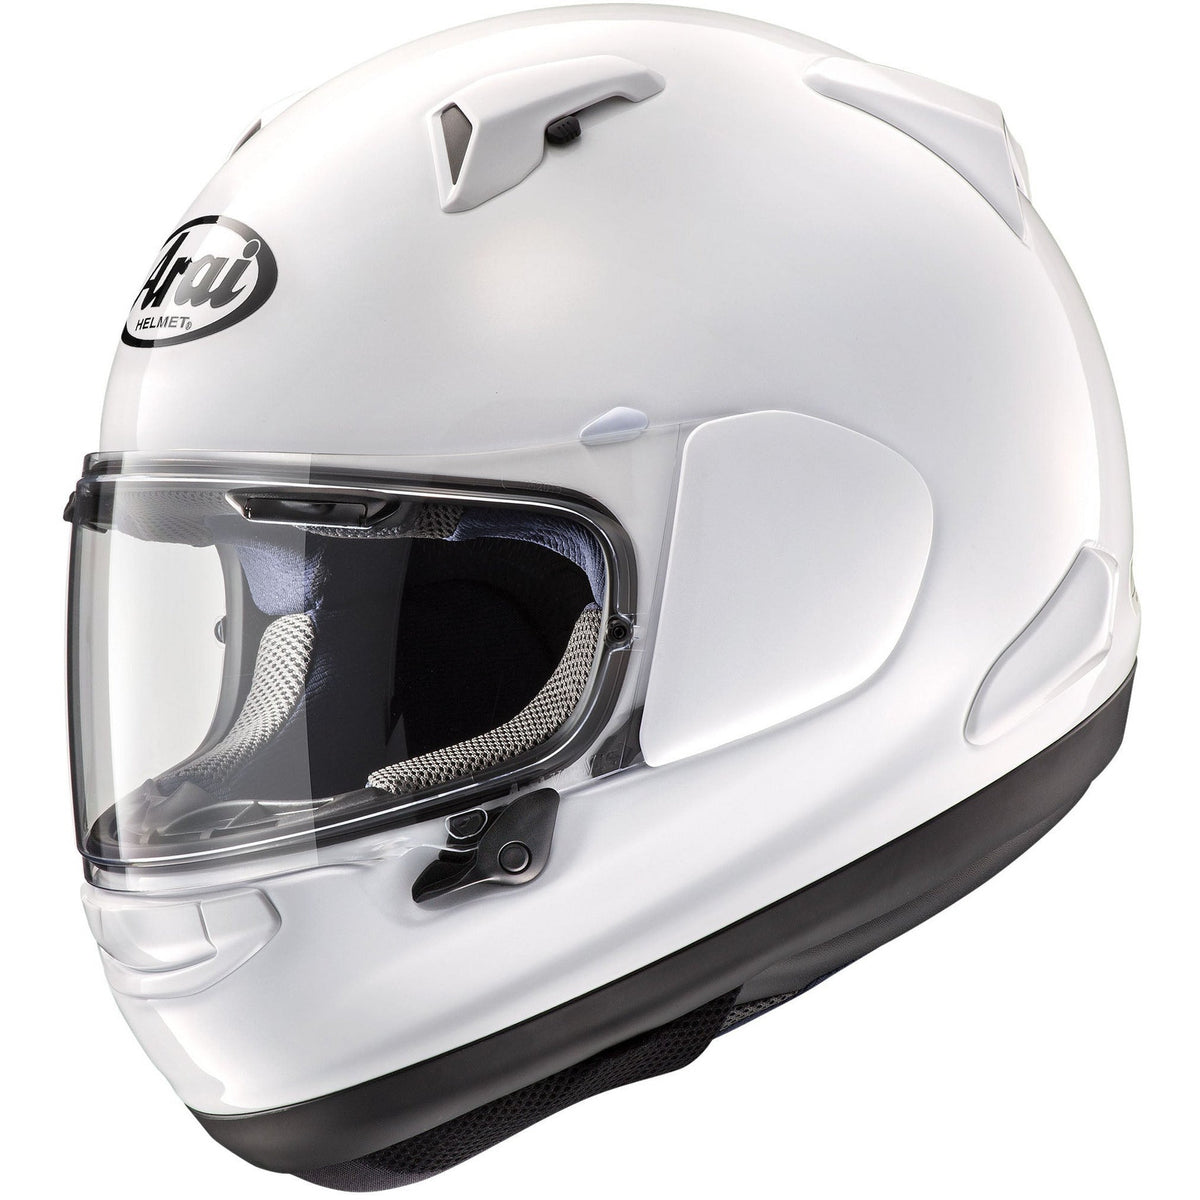 Quantum-X Helmet (Diamond White)